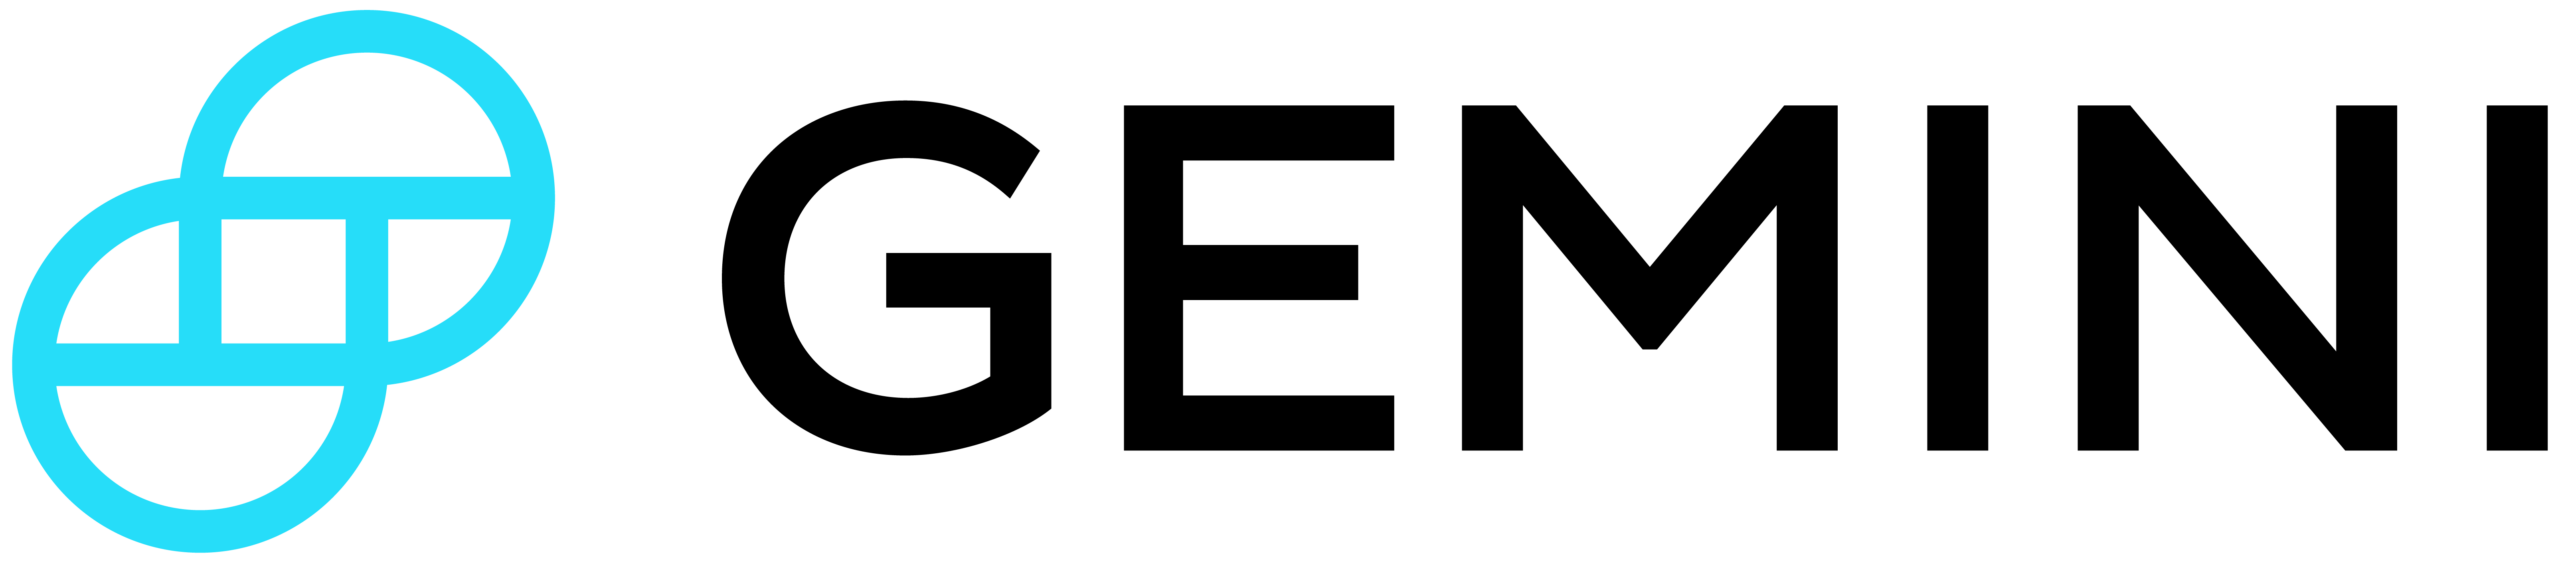 Gemini Wallet Logo